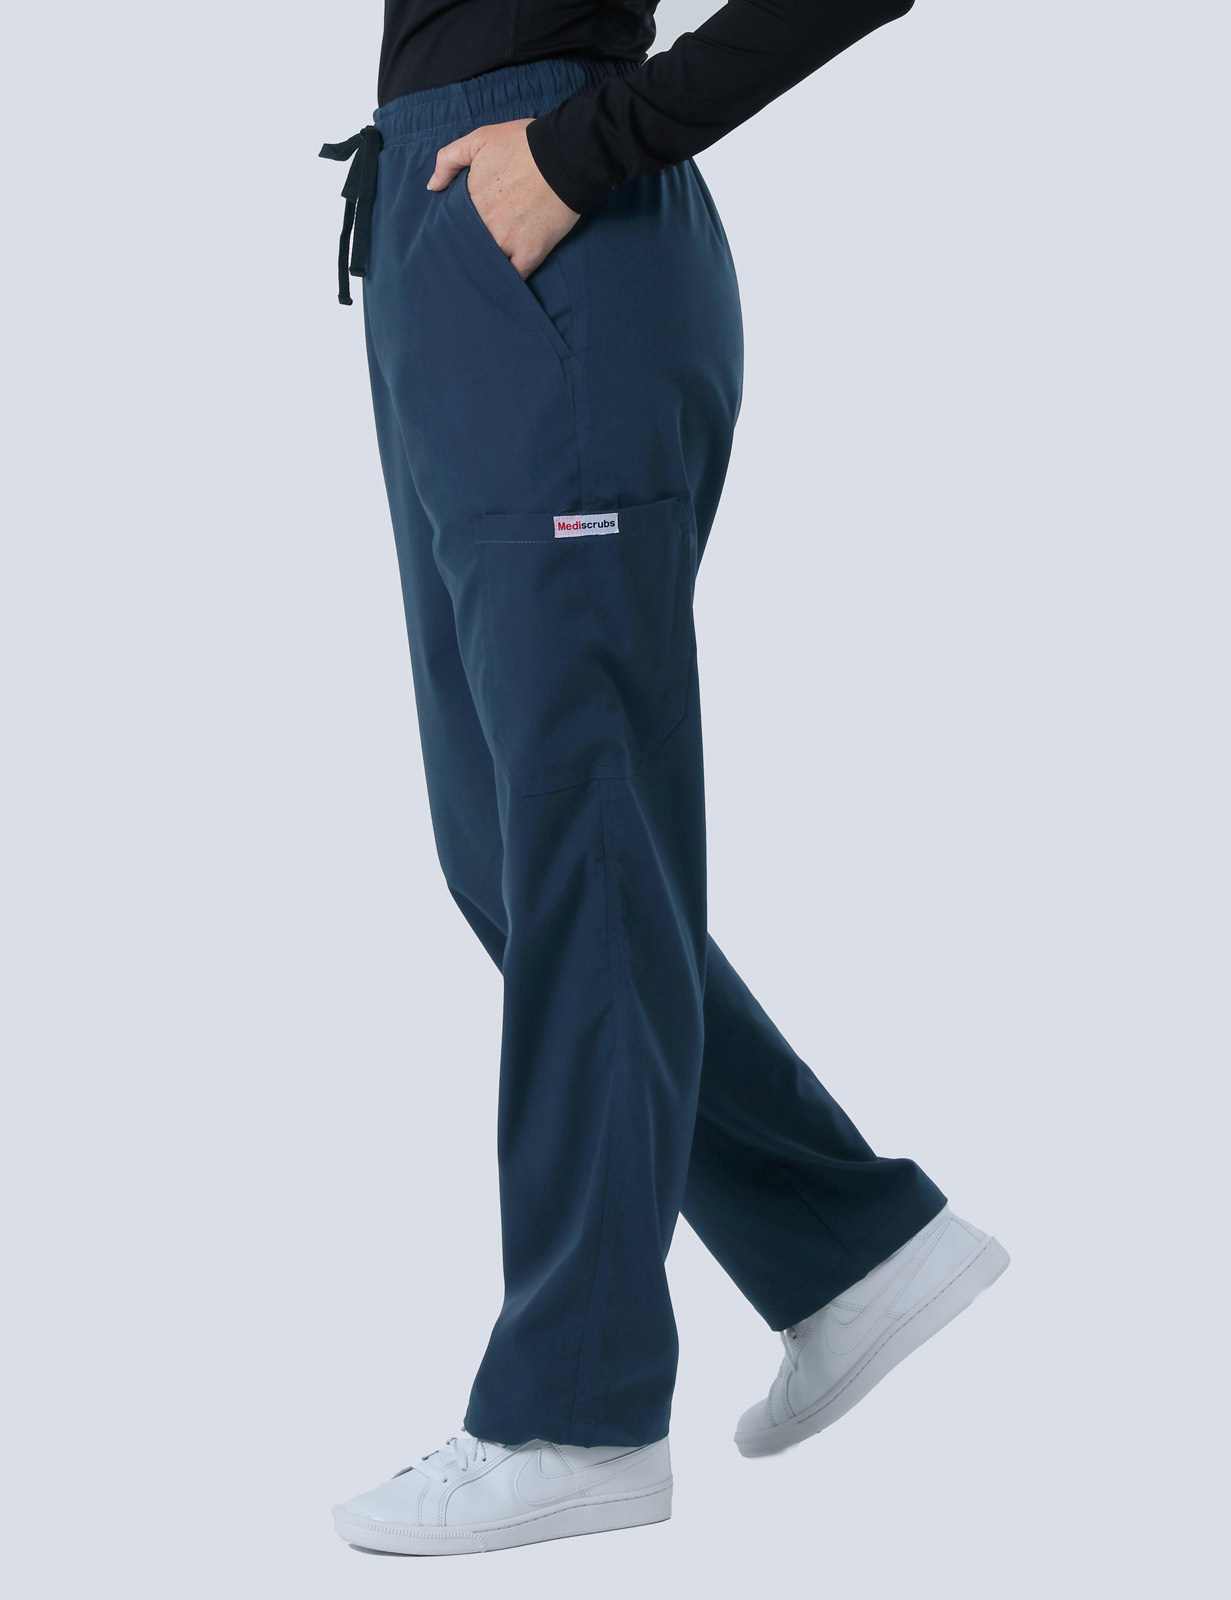 Ipswich Hospital Cardiac Care Unit Uniform Set Bundle (Women's Fit Solid Top and Cargo Pants in Navy + 3 Logos)